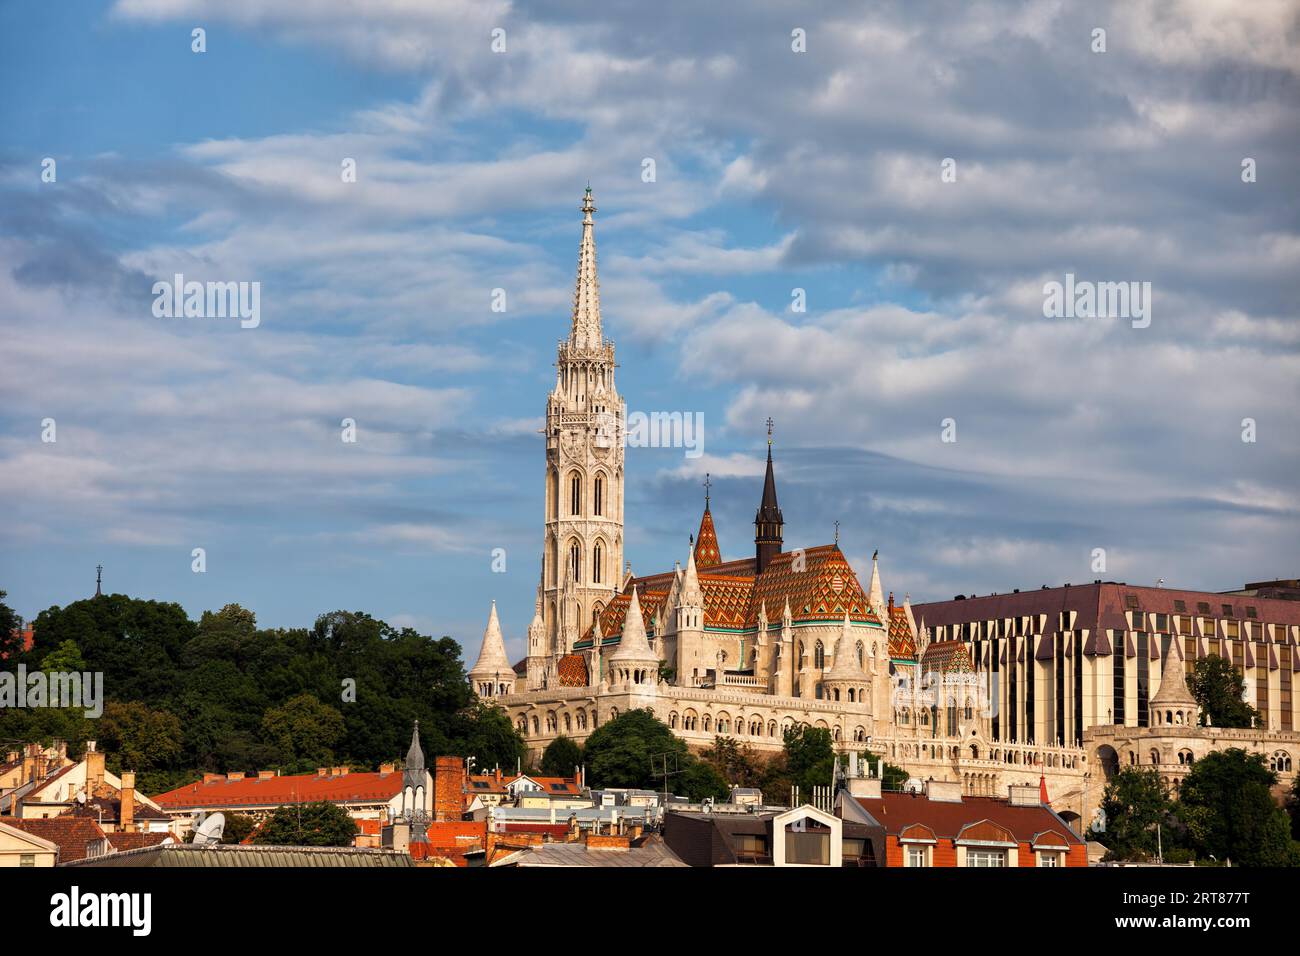 Matthias Church and Fisherman's Bastion in Budapest city, Hungary Stock Photo